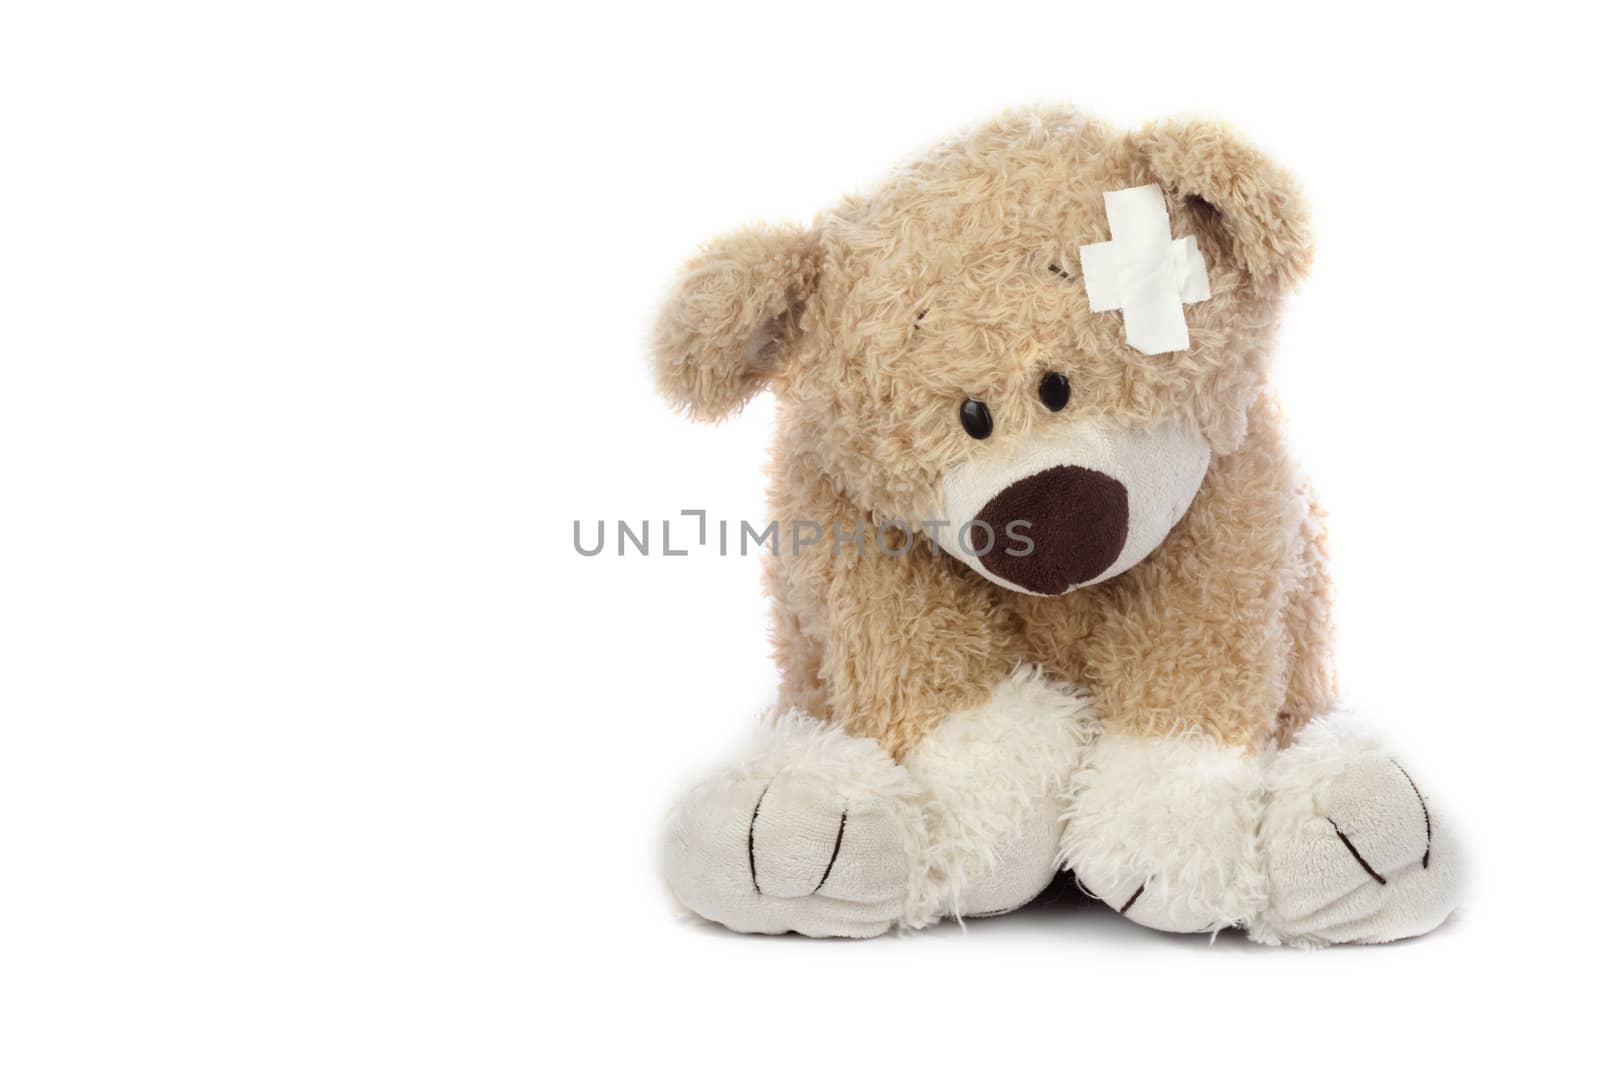 Hurt Teddy Bear by Daniel_Wiedemann